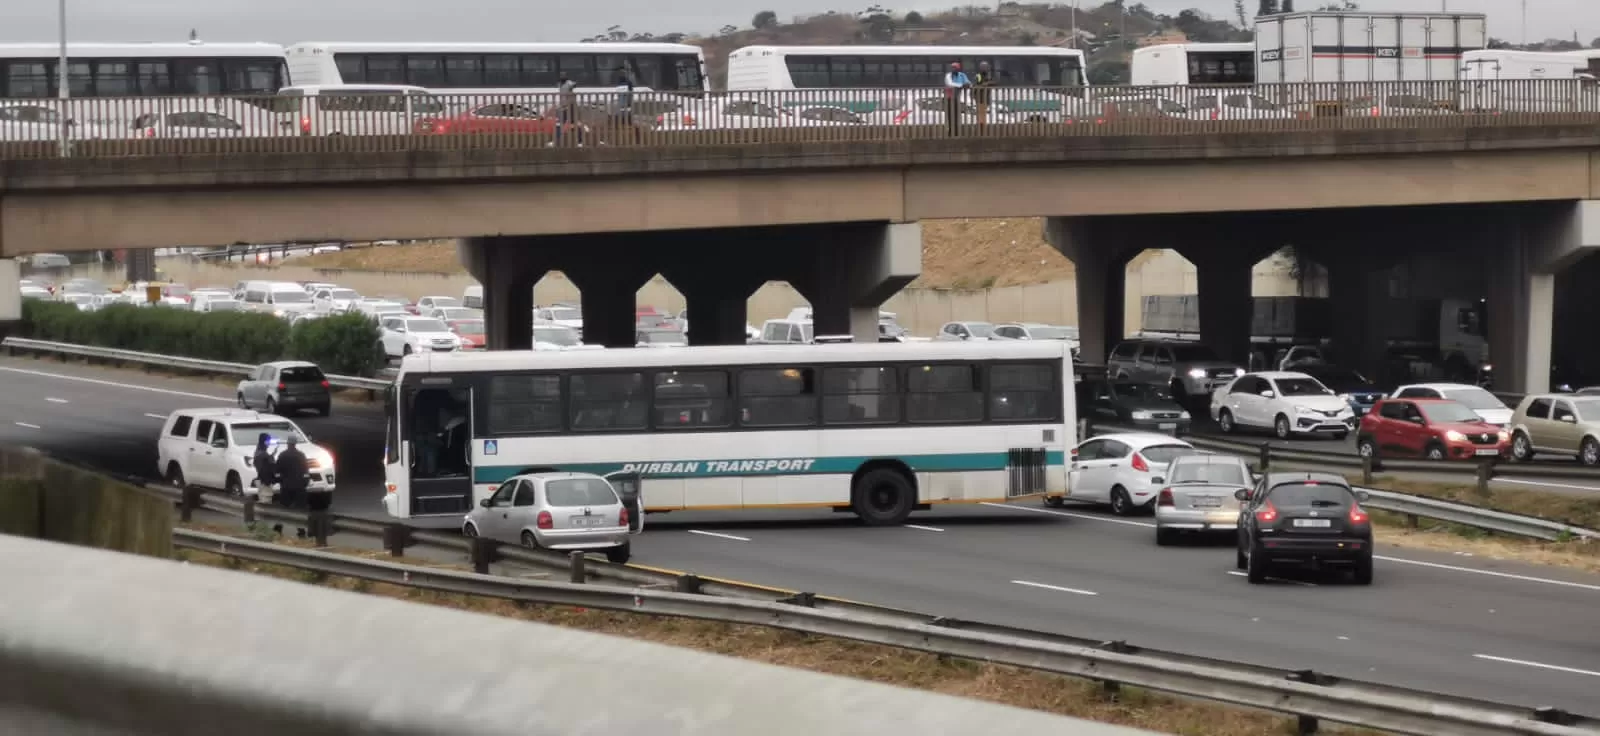 durban transport bus driver strike